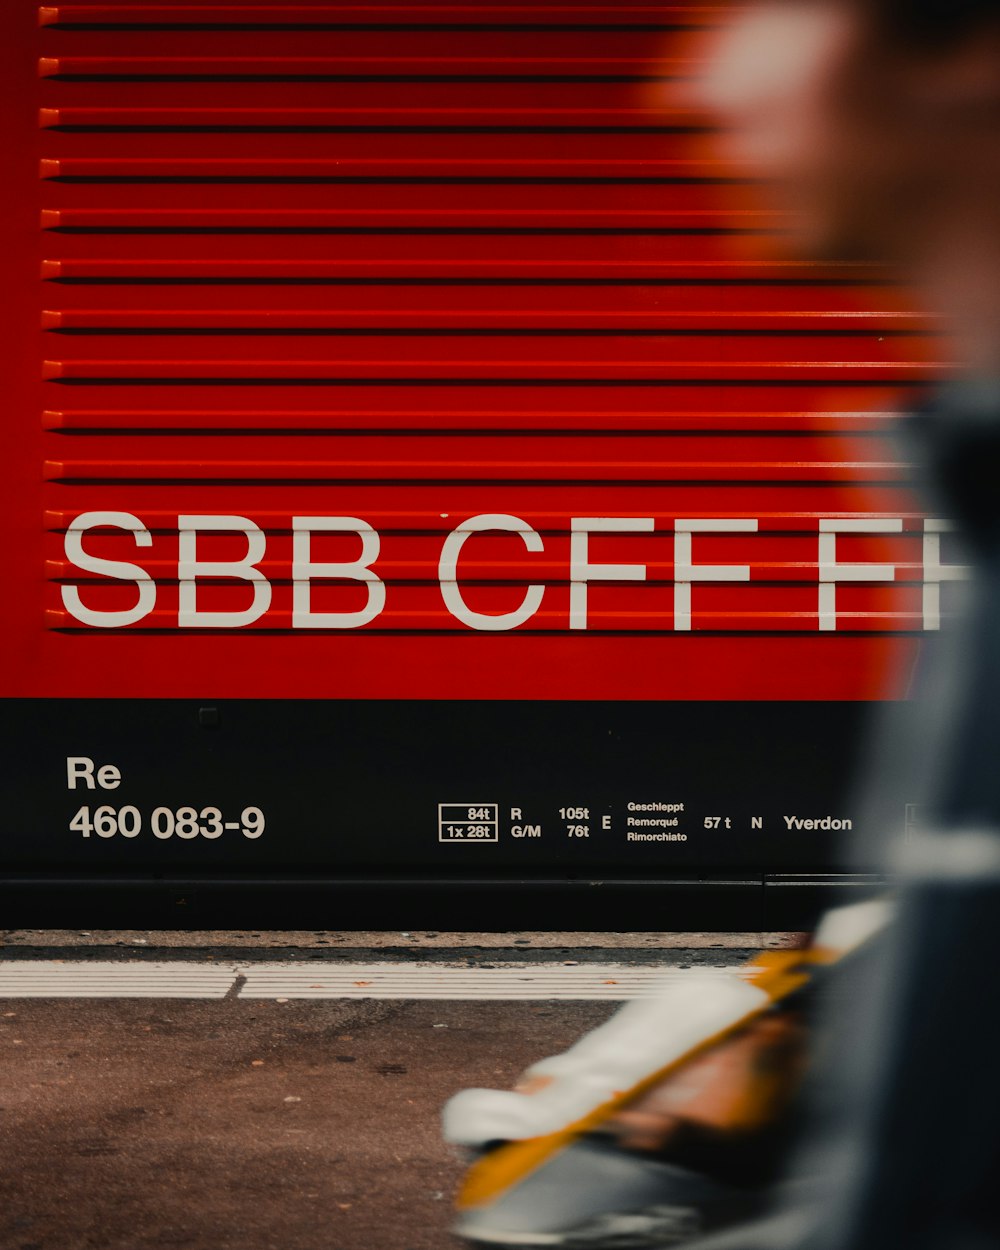 SBB CFF signage